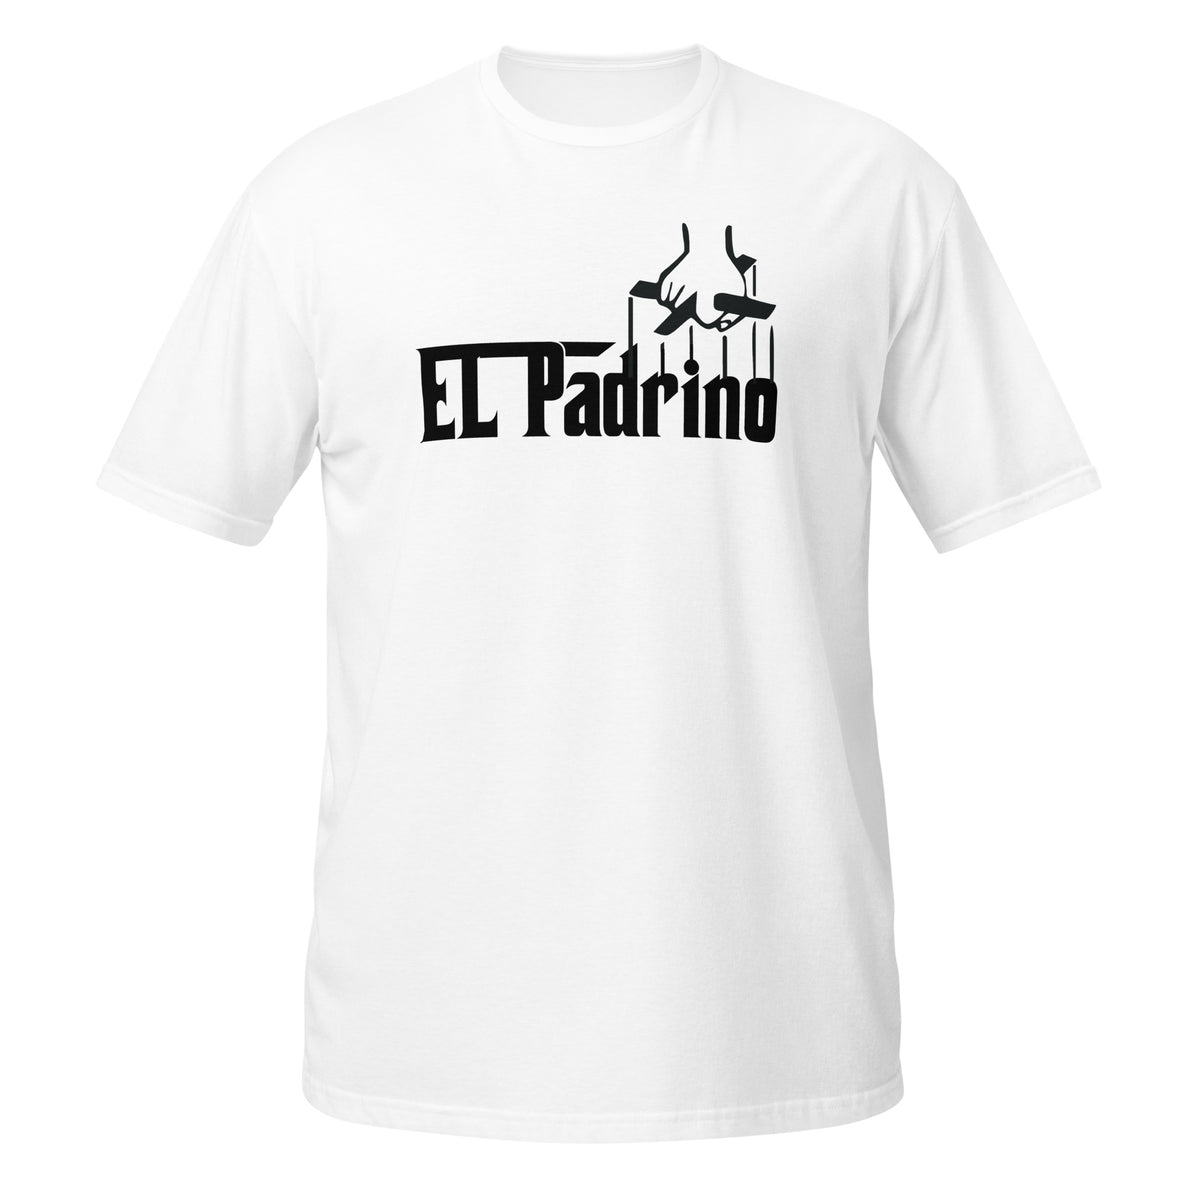 El Padrino T-Shirt (The Godfather)